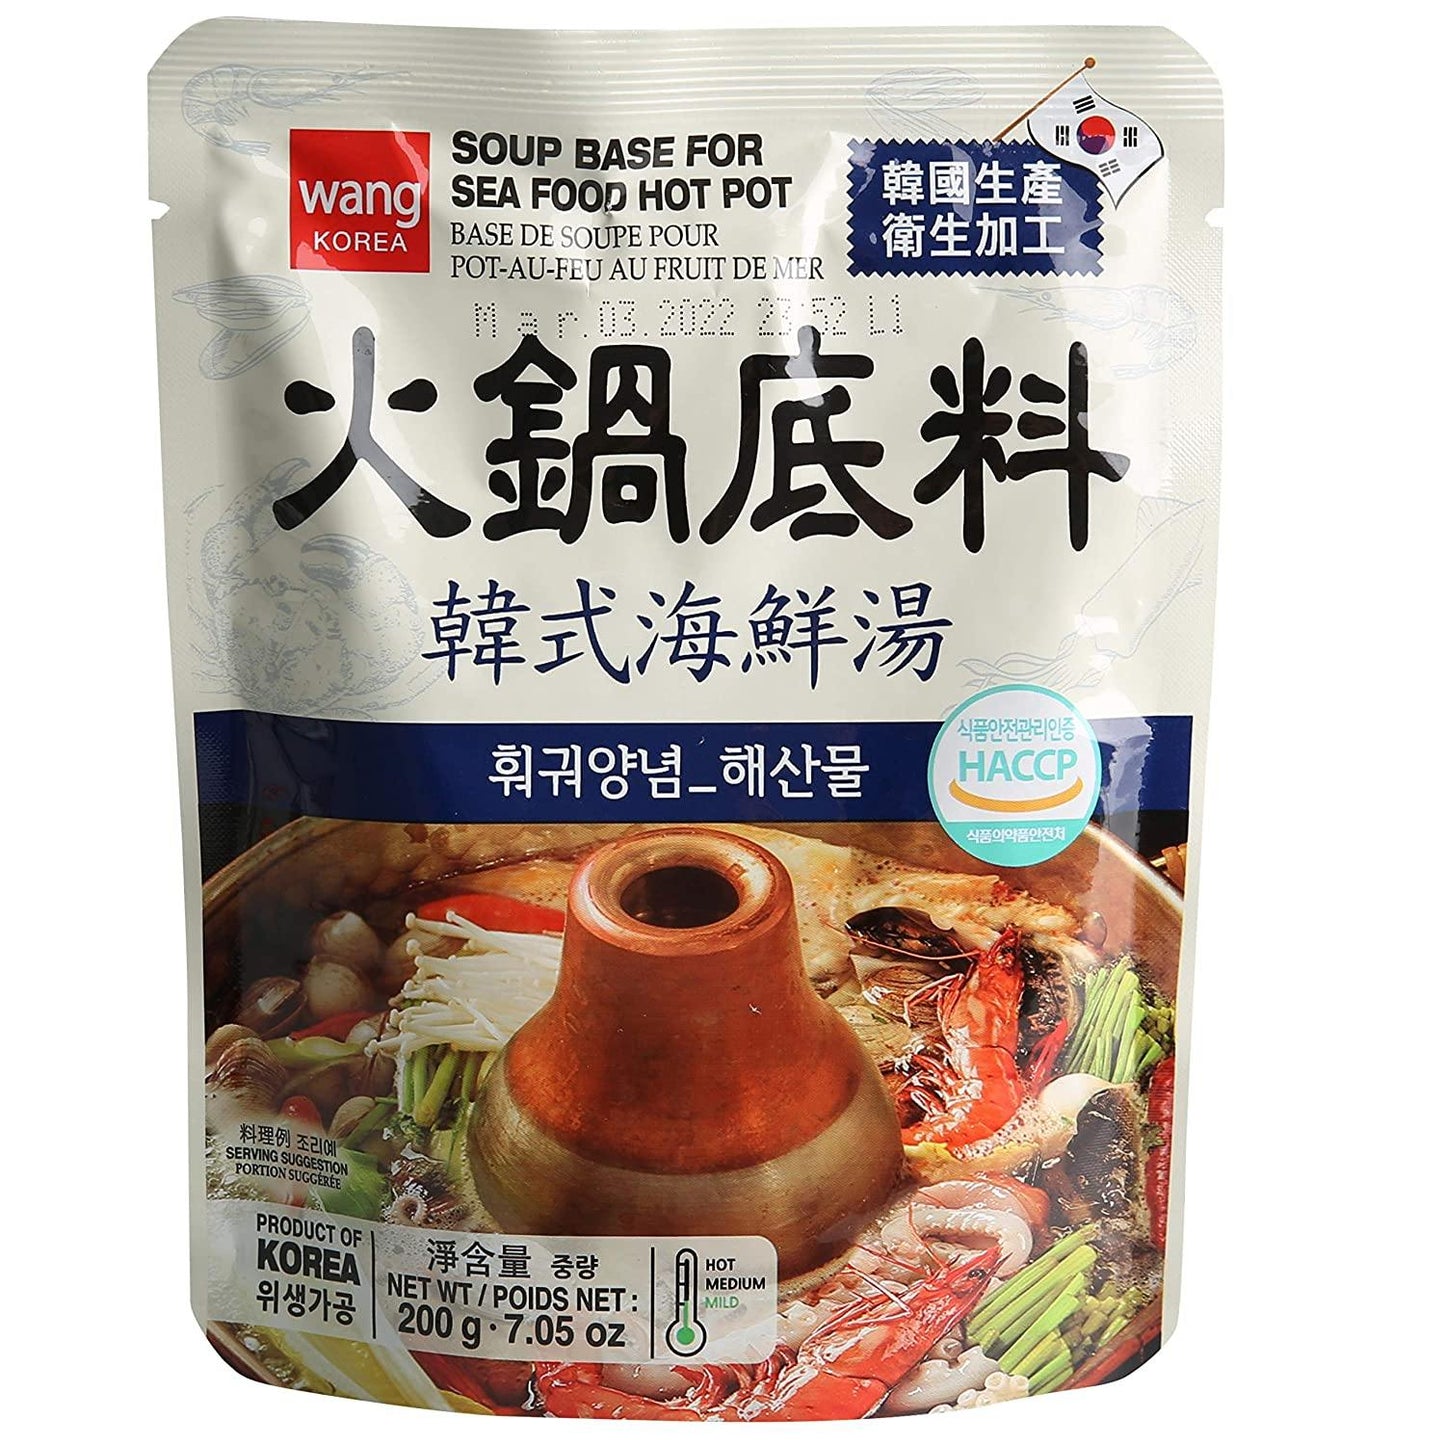 Wang Hot Pot Soup Base Sauce 4 Flavors (7.05 Oz, 200g) - Kimchi, Bulgogi, Seafood, Yukgaejang - COKOYAM